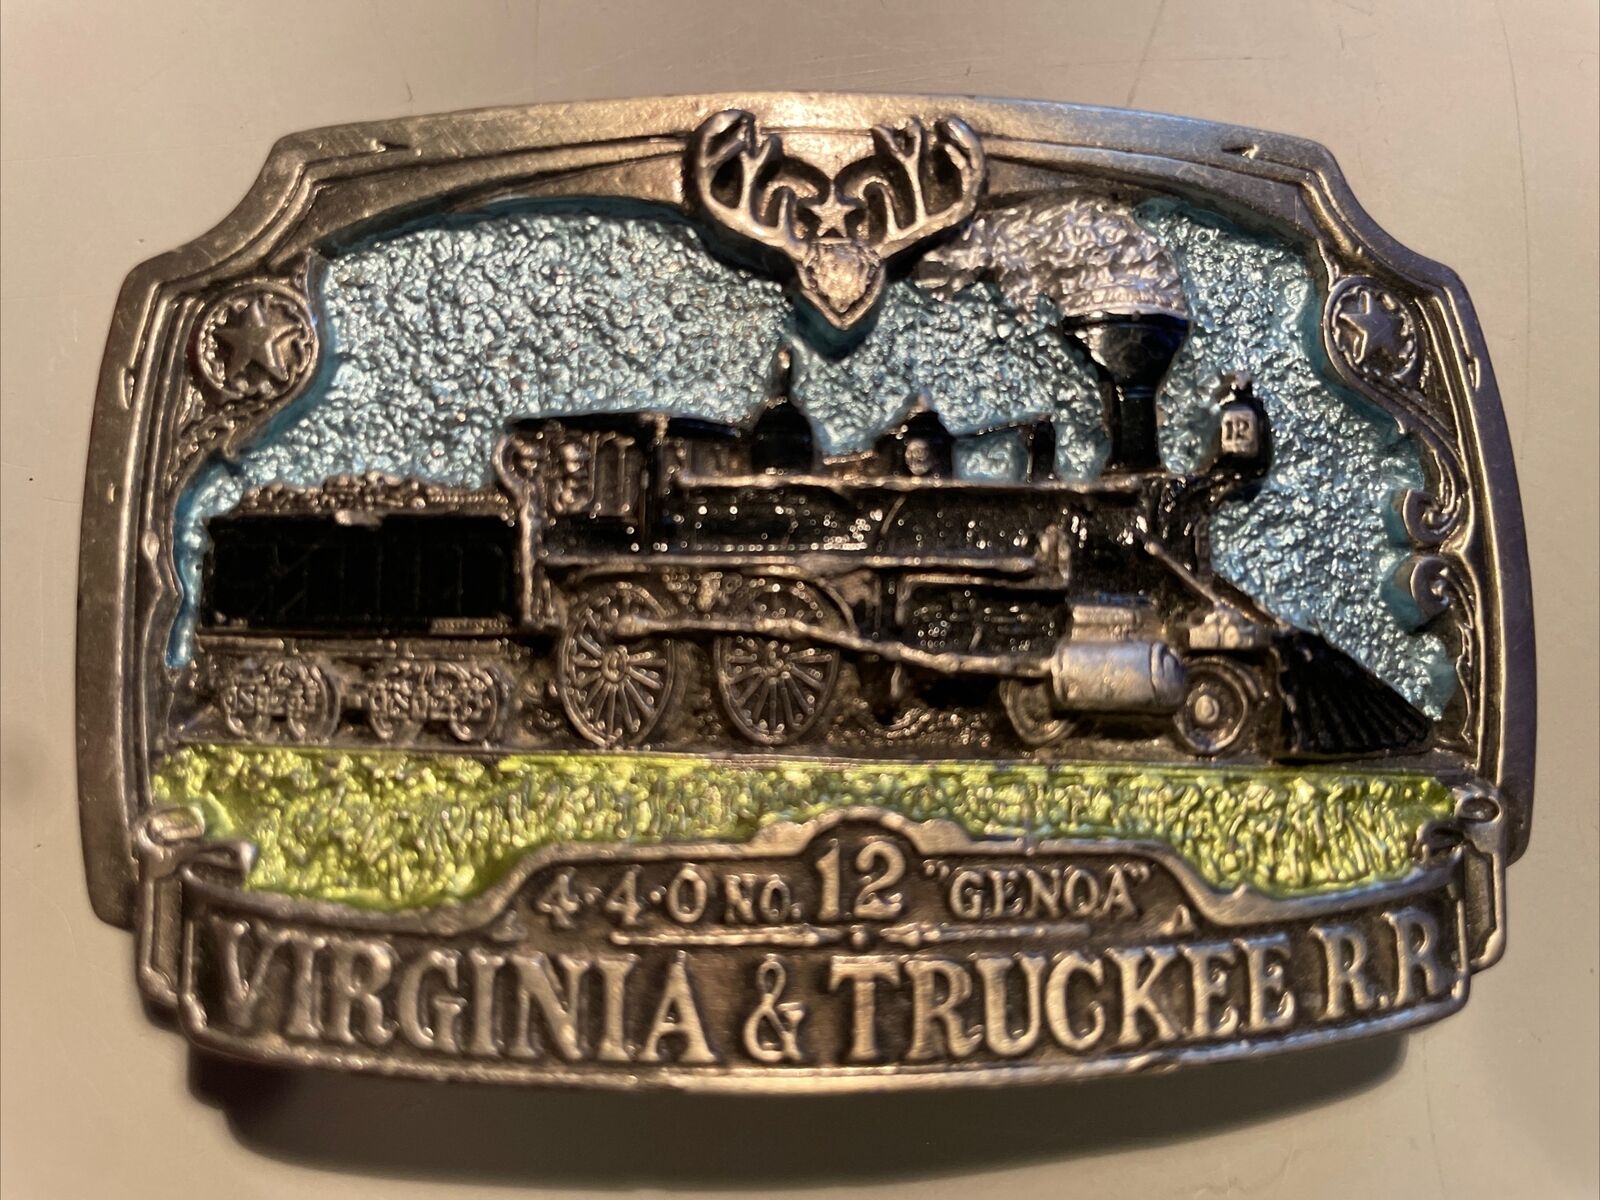 Vintage 1984 / Virginia & Truckeee  RR / 440 No. 12 “Genoa” Belt Buckle 